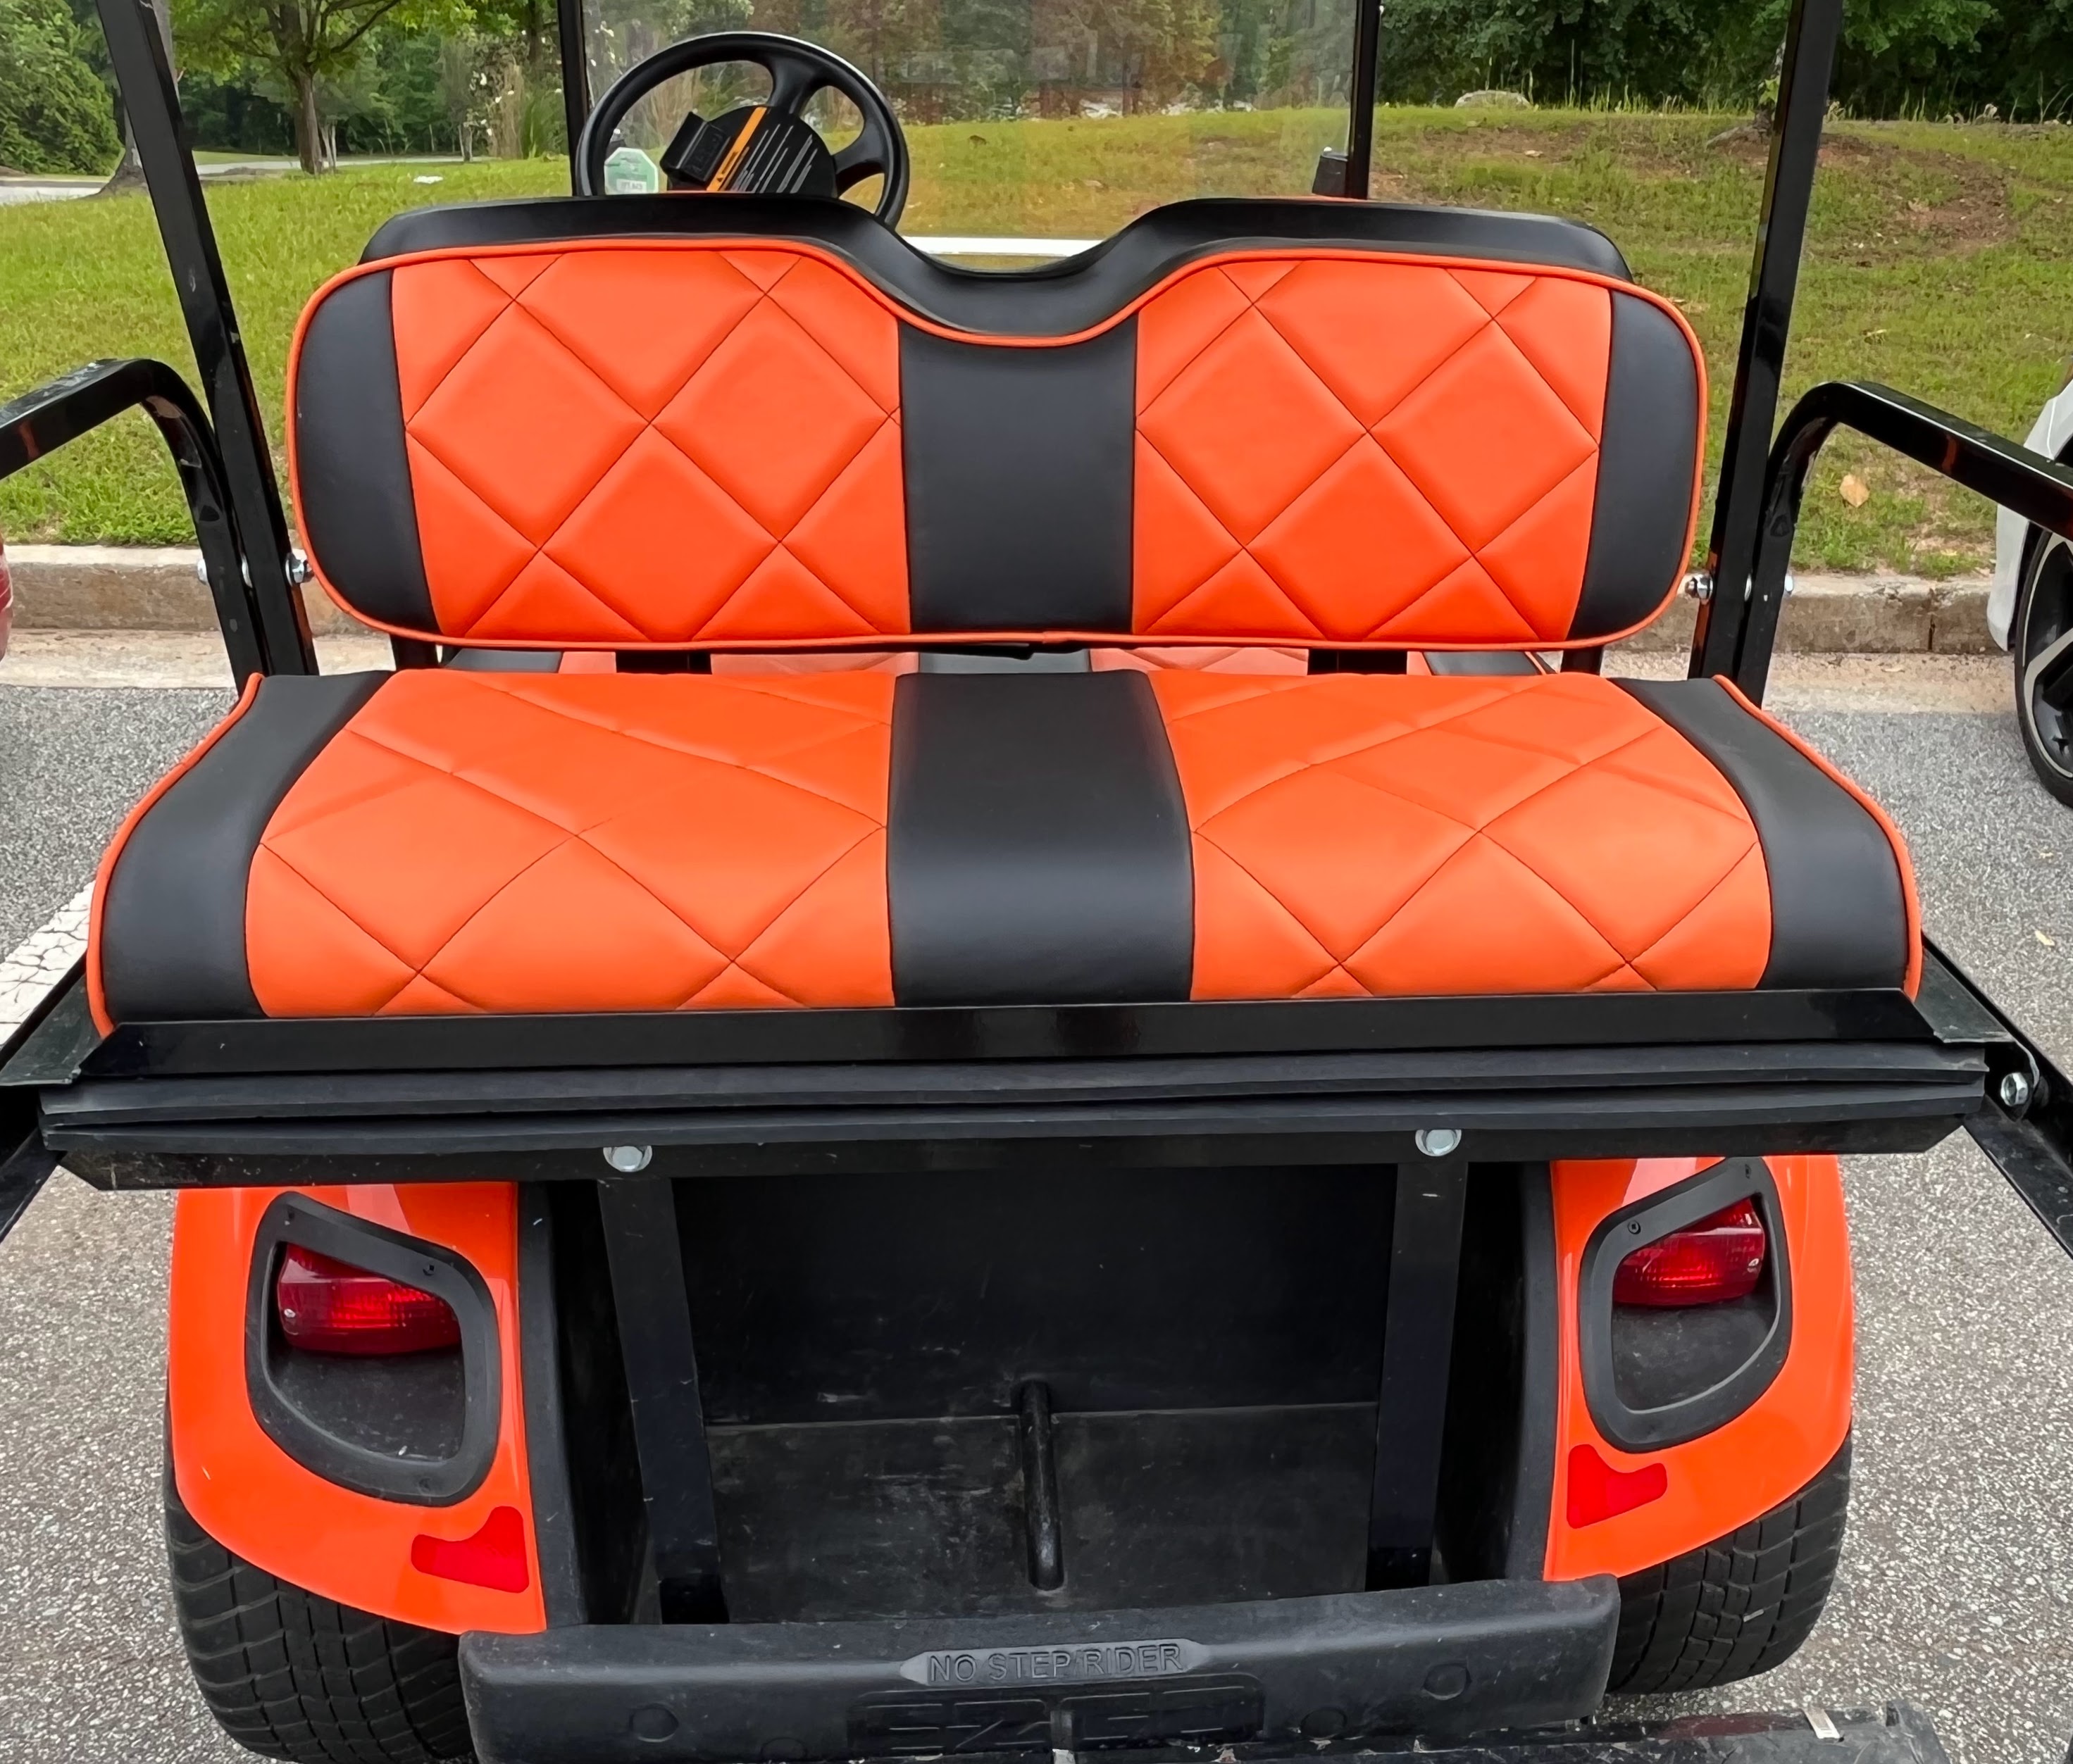 EZGO golf cart seat covers